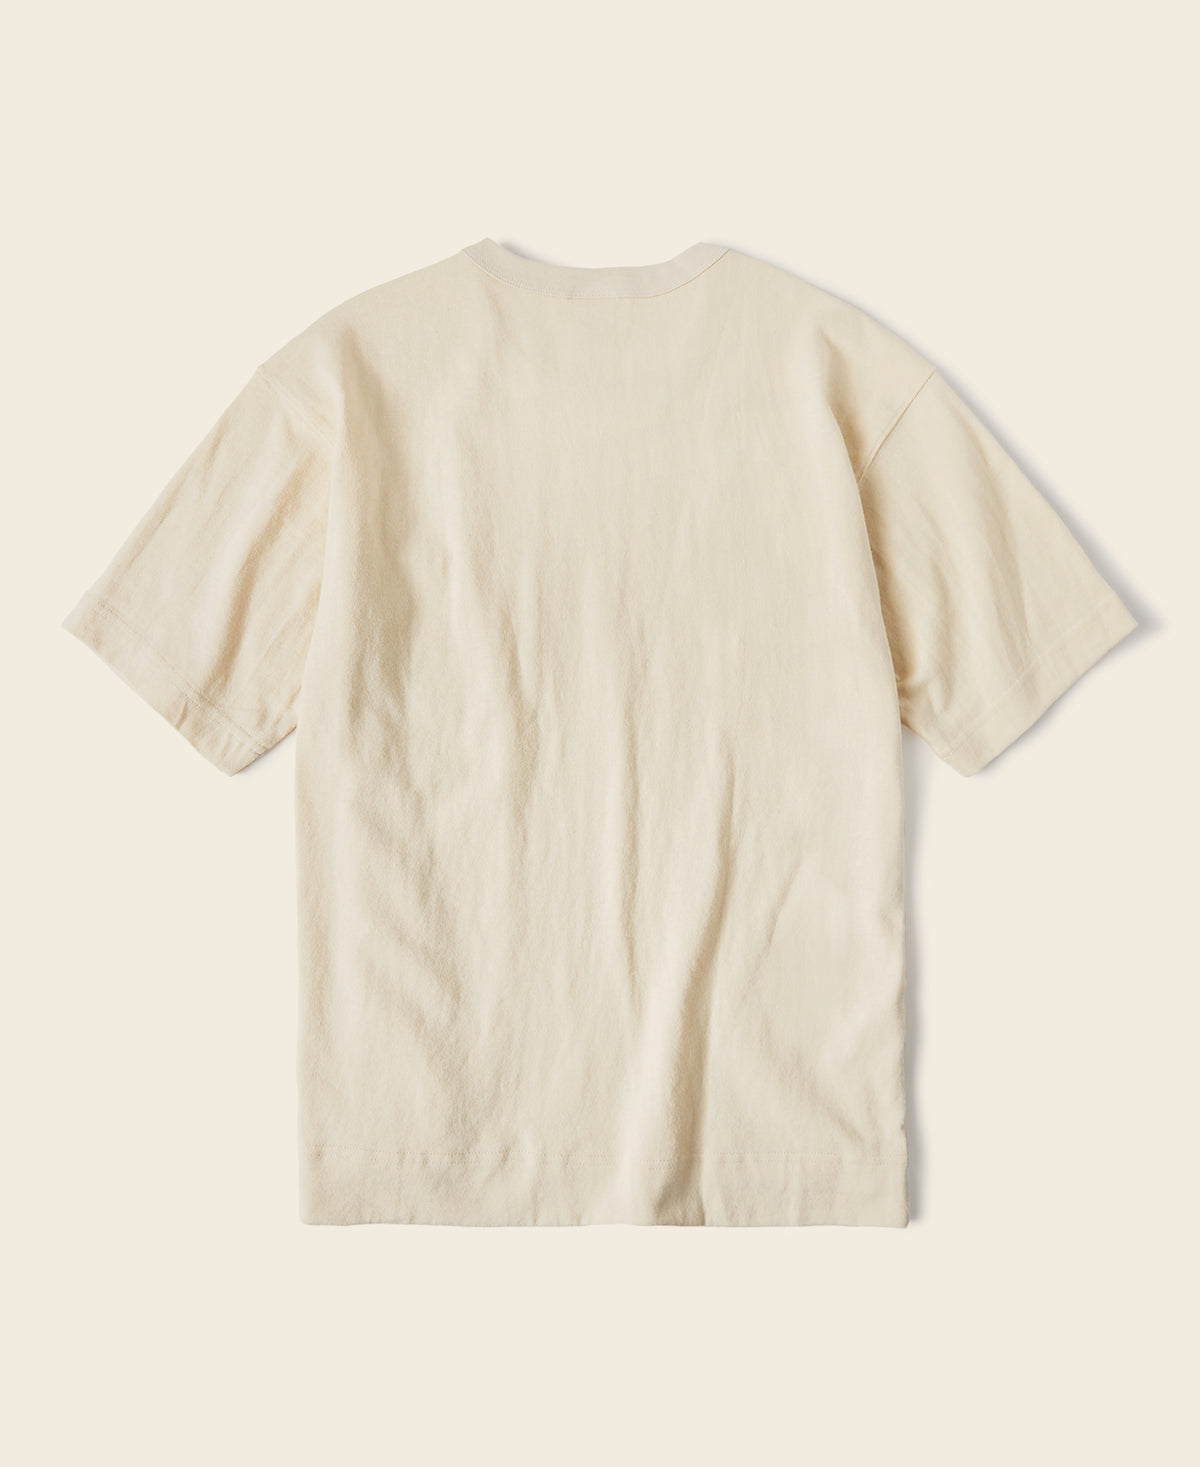 9.8 oz Cotton Classic Pocket T-Shirt - Apricot